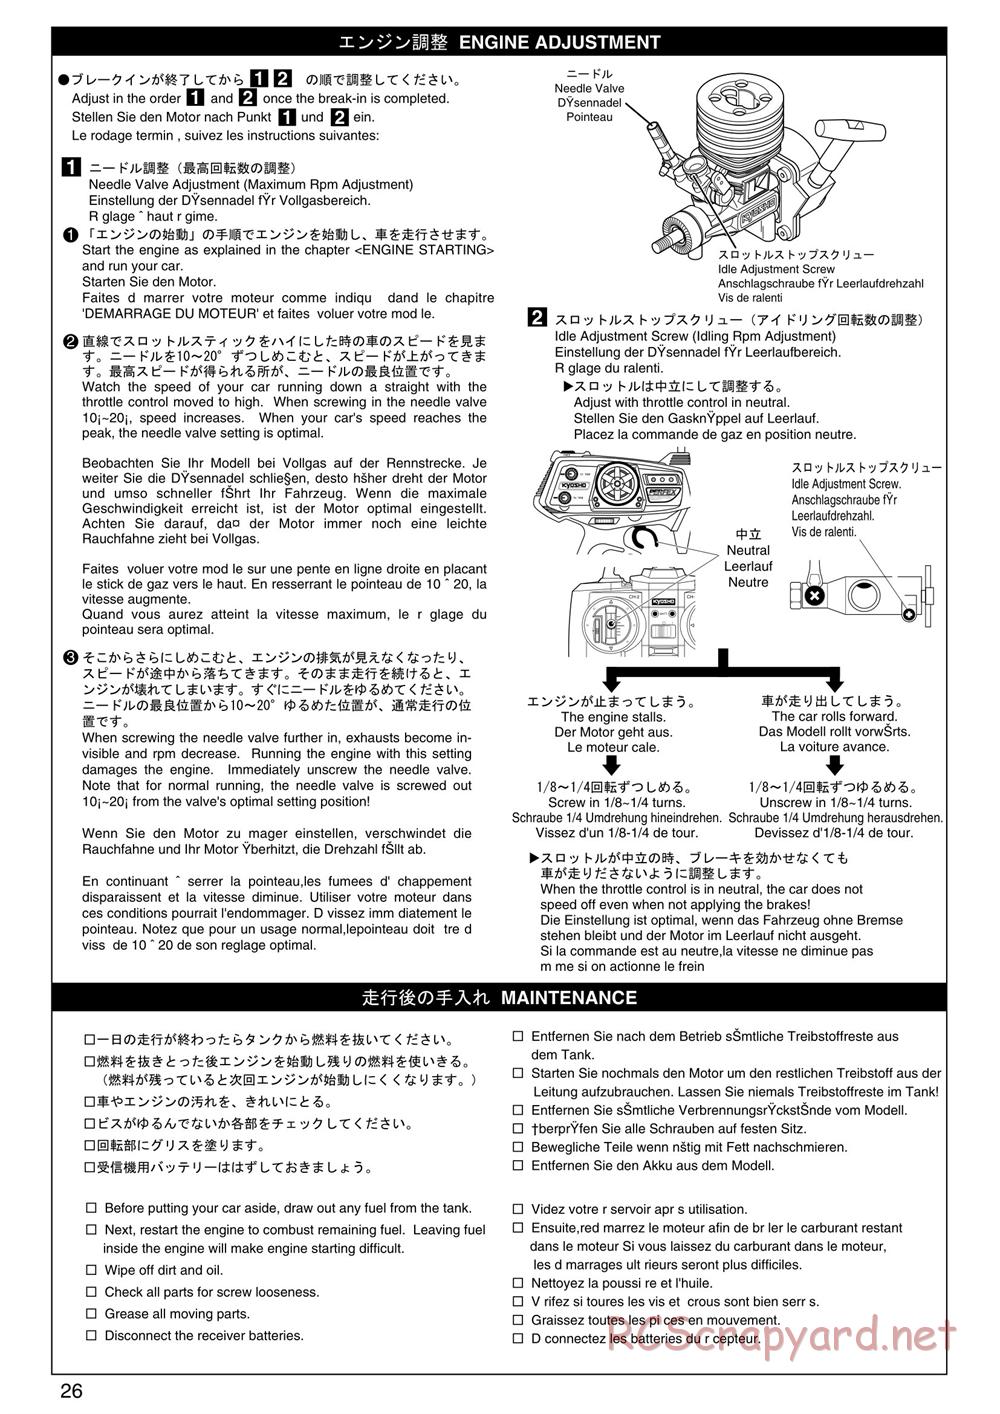 Kyosho - PureTen GP Alpha 2 - Manual - Page 26